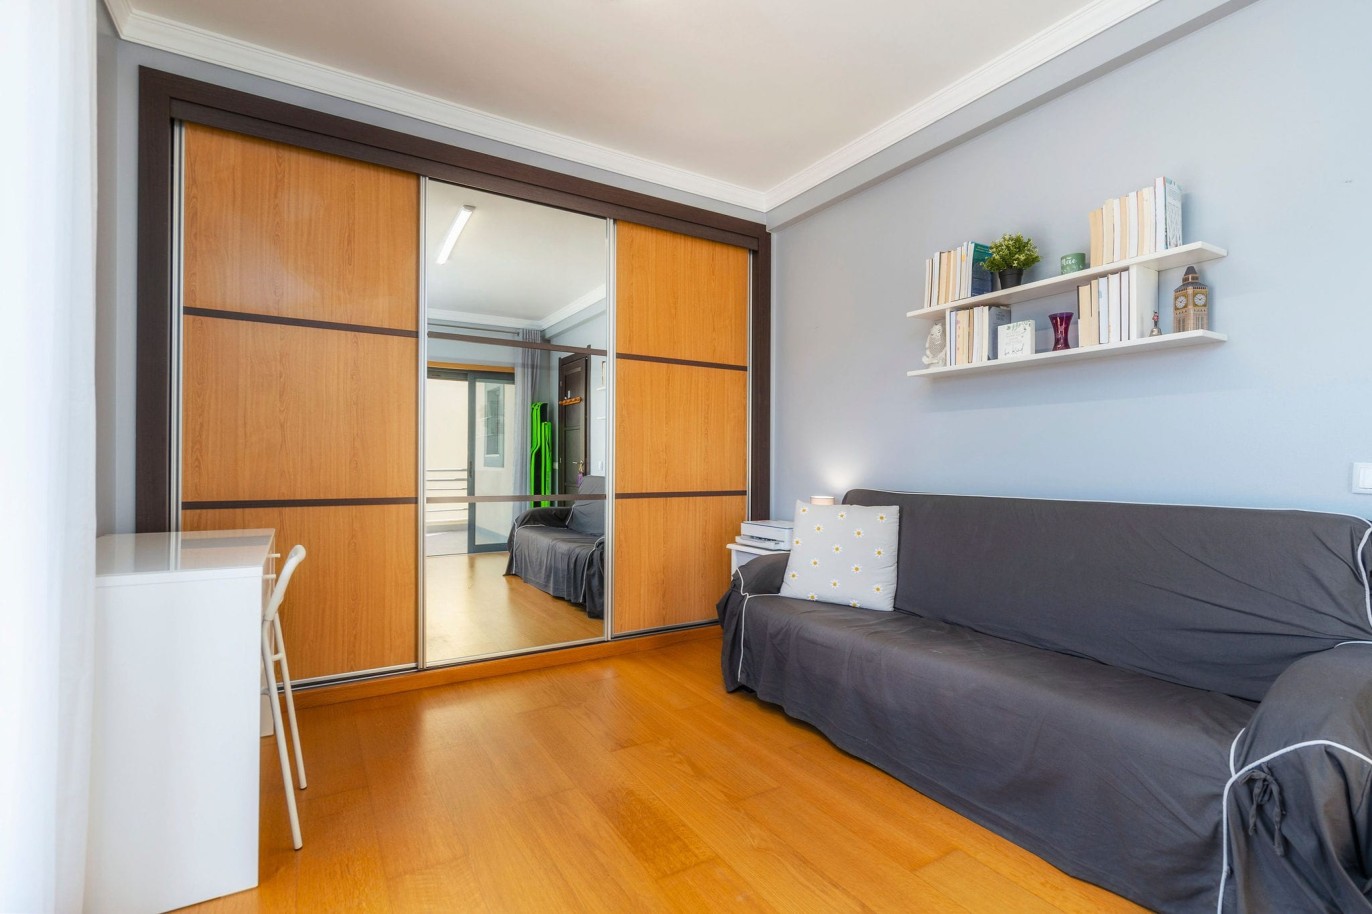 3+1 bedroom villa & 2 bedroom apartment for sale in Quarteira, Algarve_240756